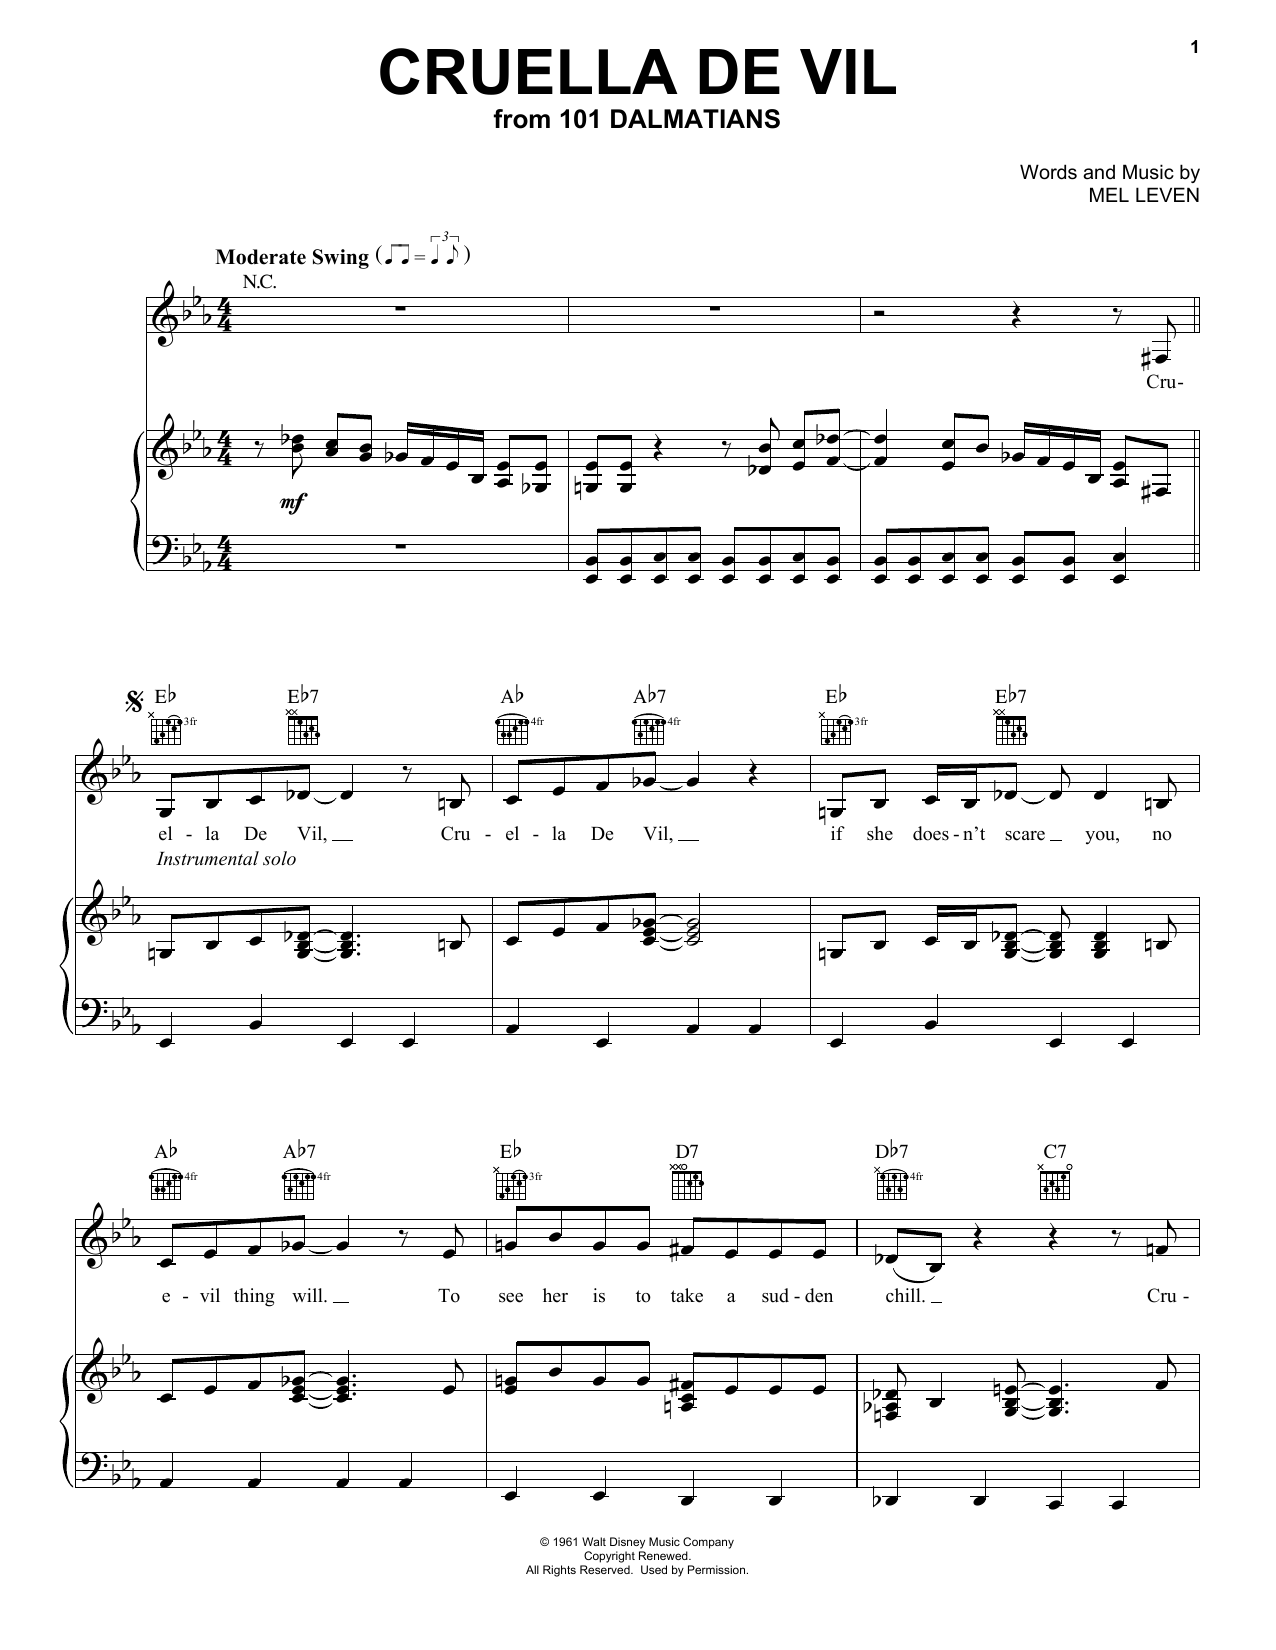 Download Mel Leven Cruella De Vil Sheet Music and learn how to play Alto Saxophone PDF digital score in minutes